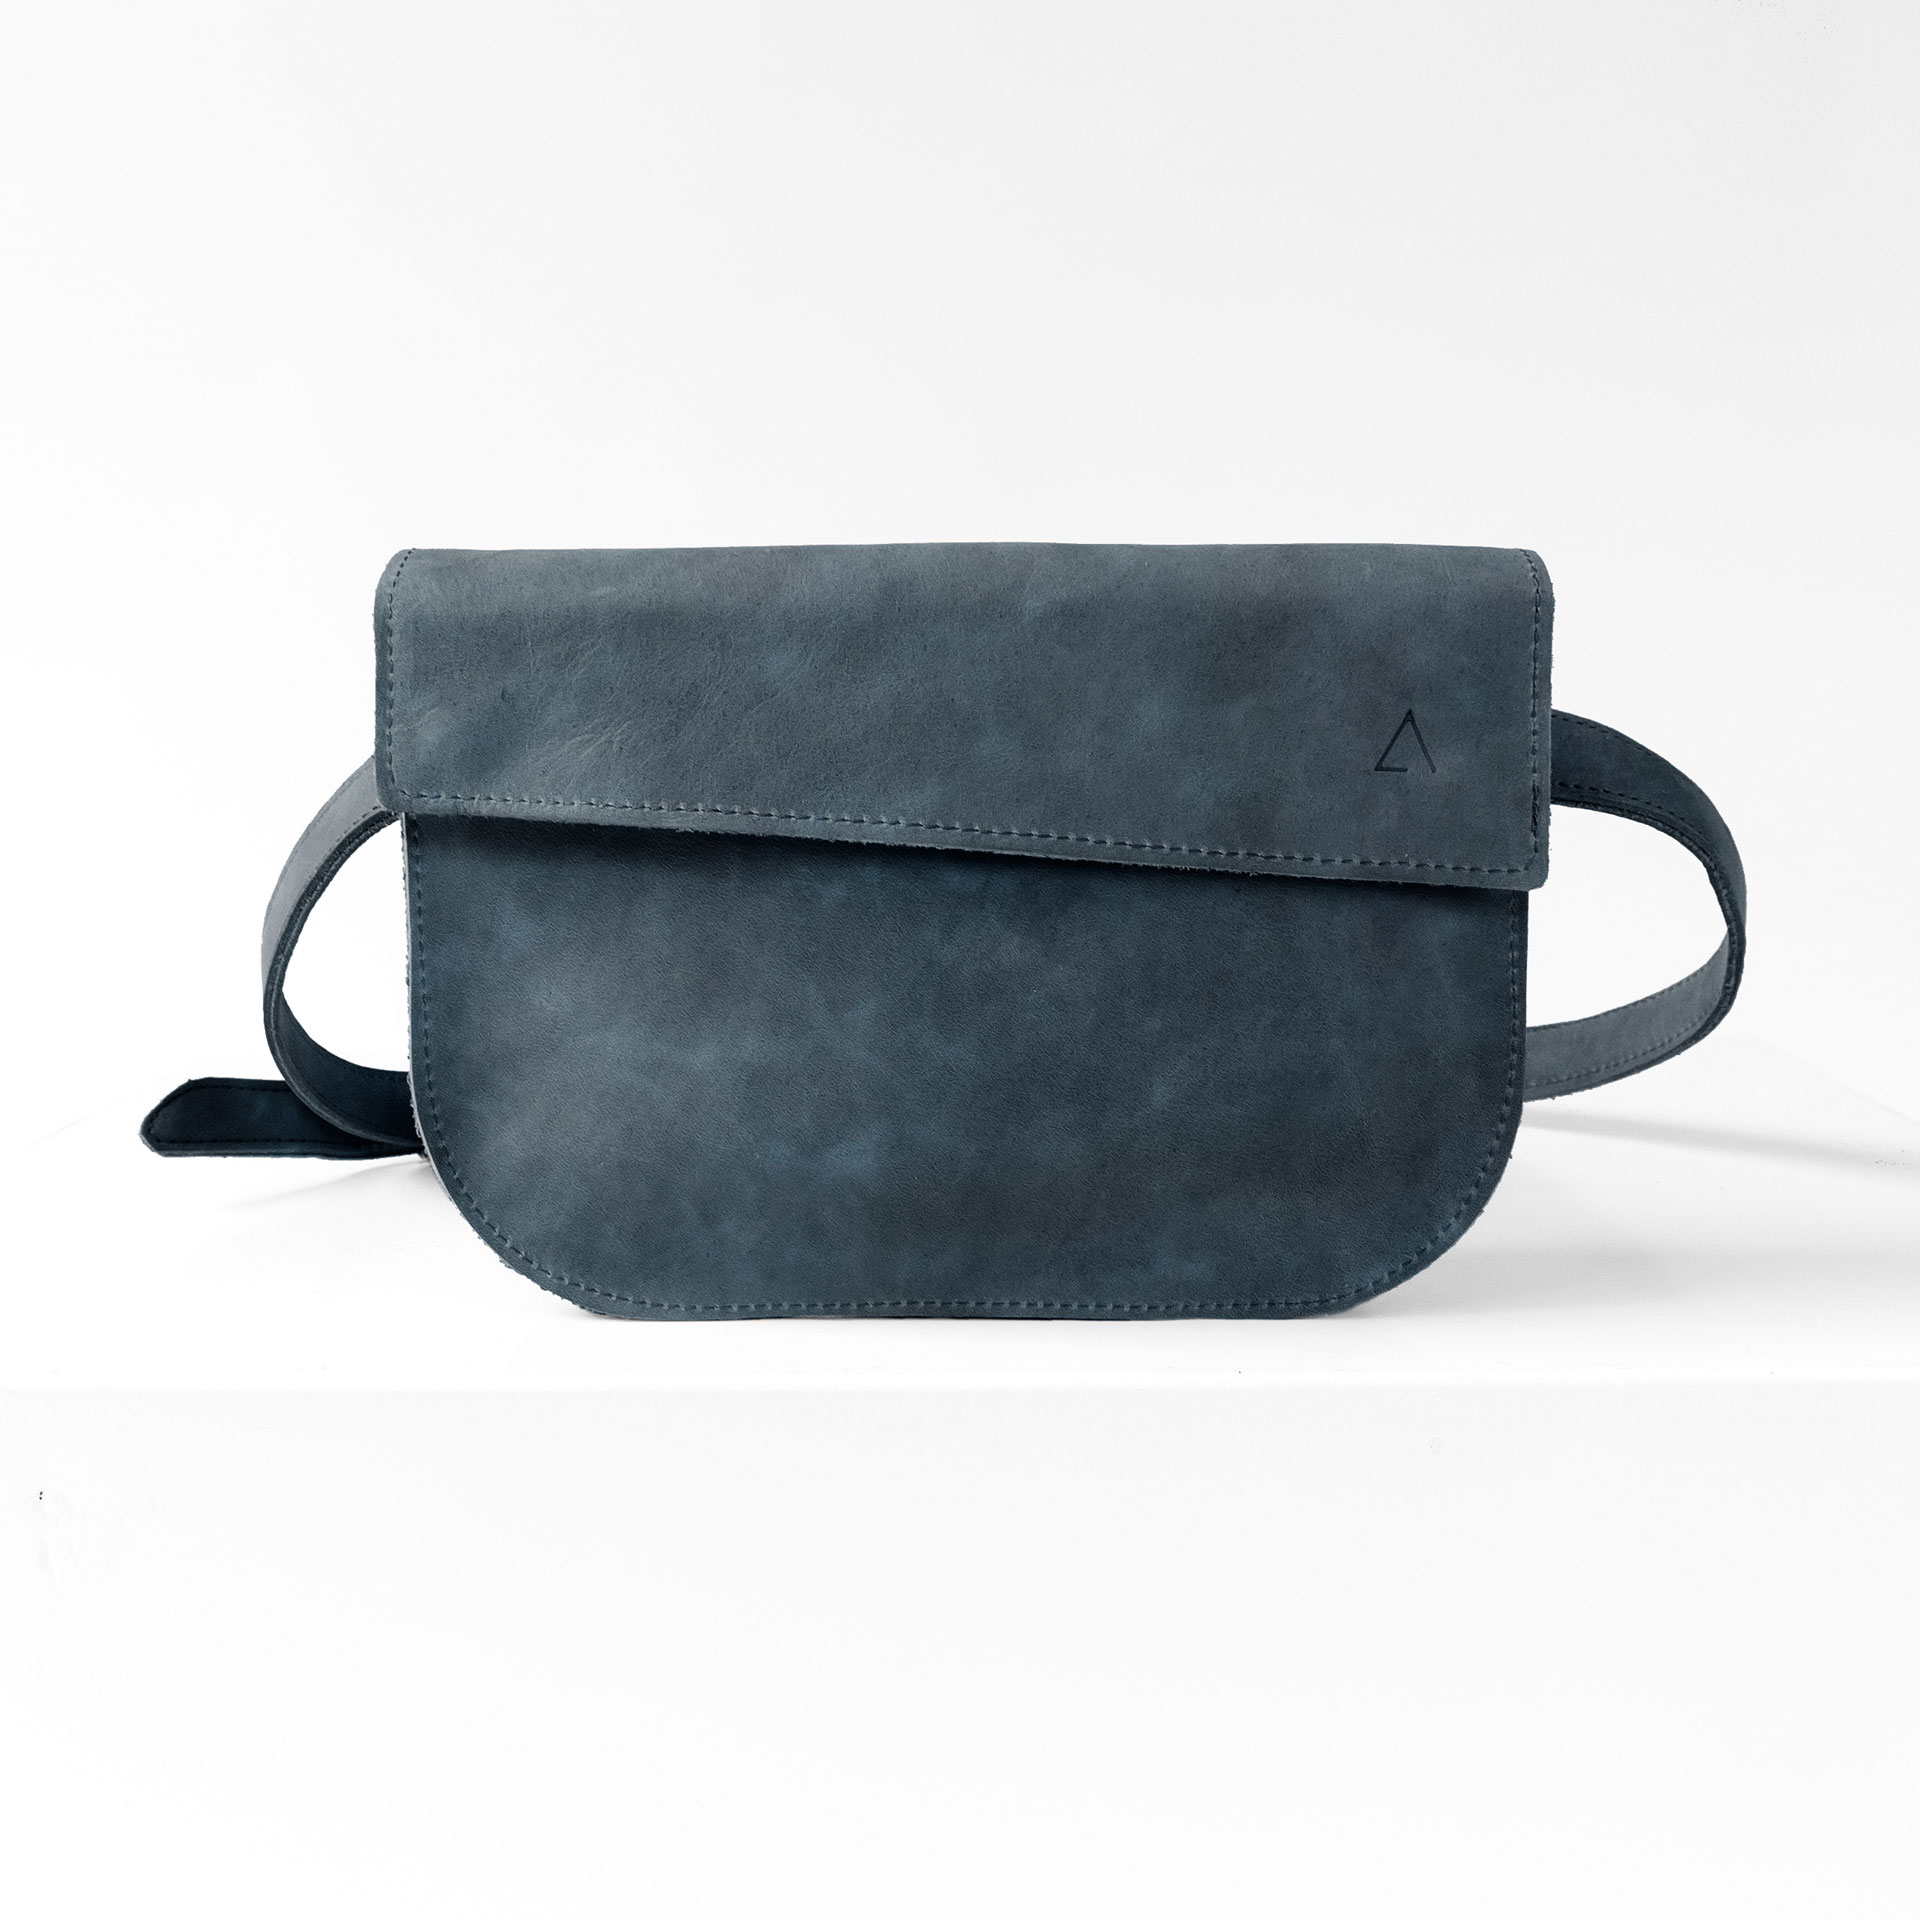 Crossbody bag TEA in the color dark blue.